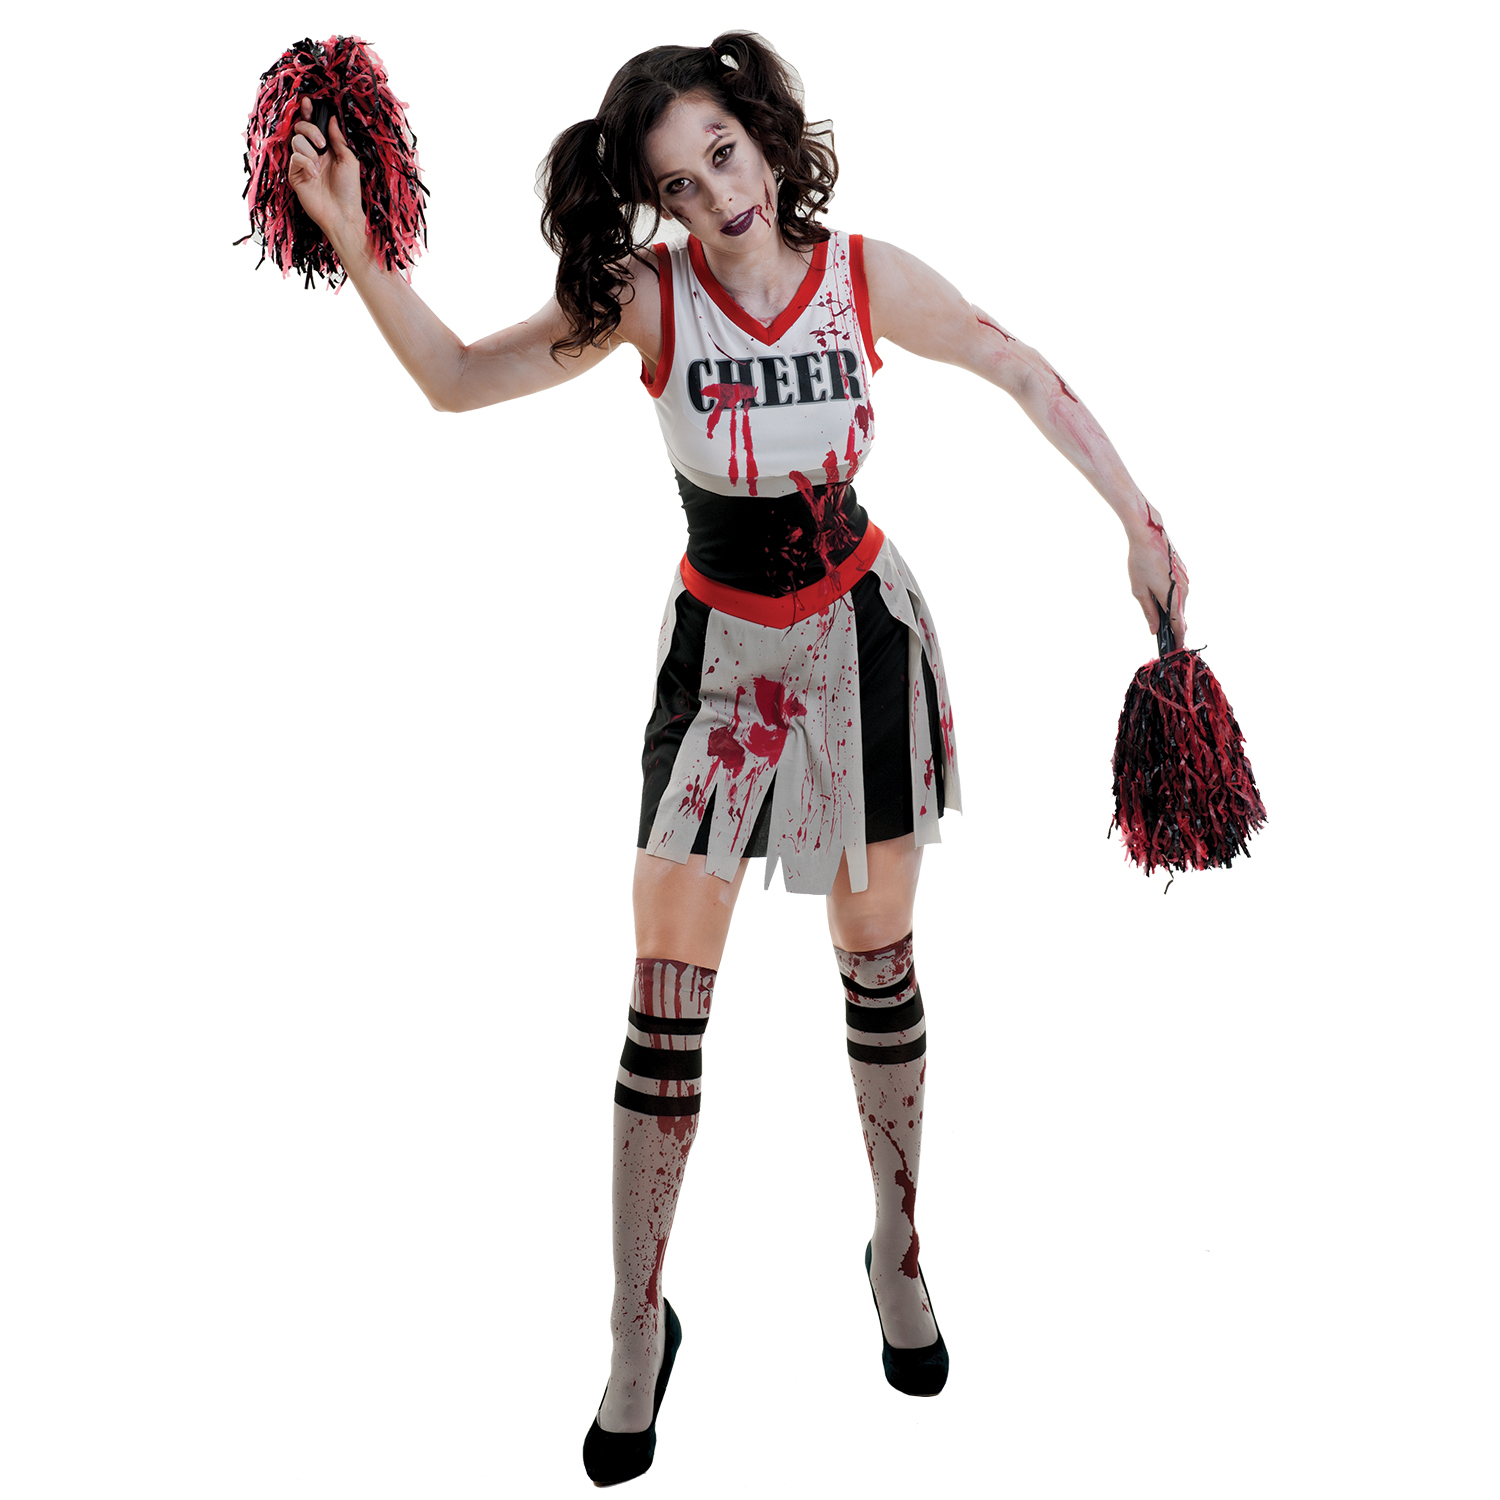 Zombie Cheerleader Costume - Size 10-12 - 1 PC : Amscan International